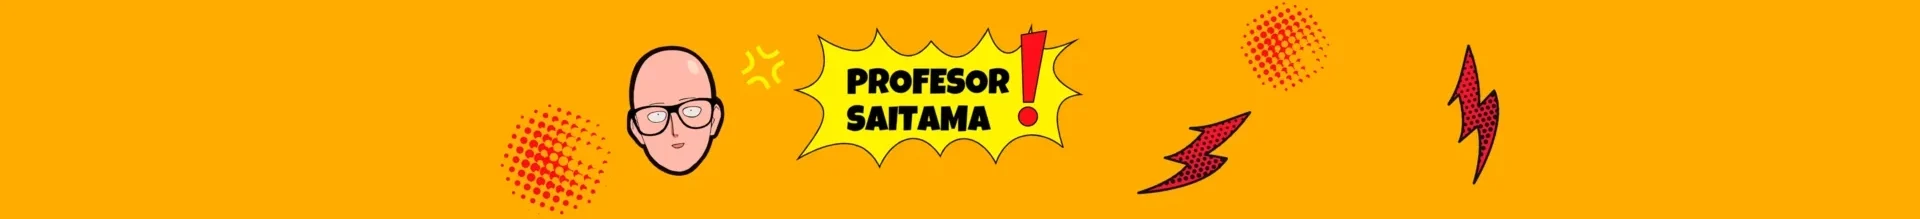 Profesor Saitama